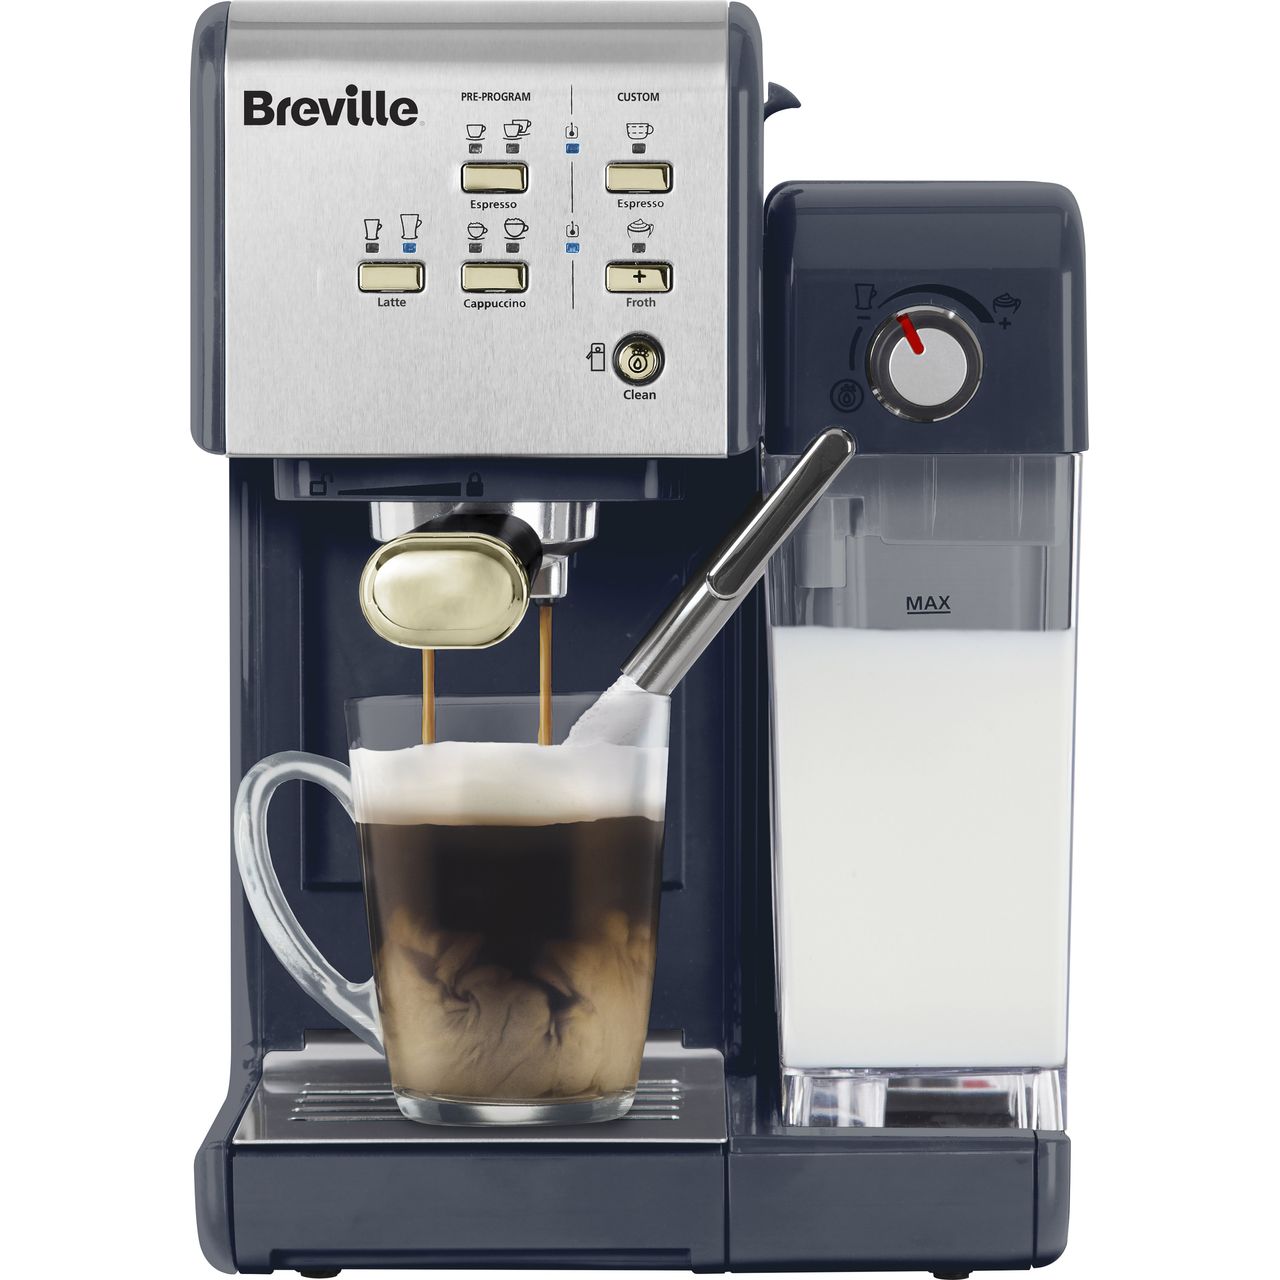 Machine breville coffee